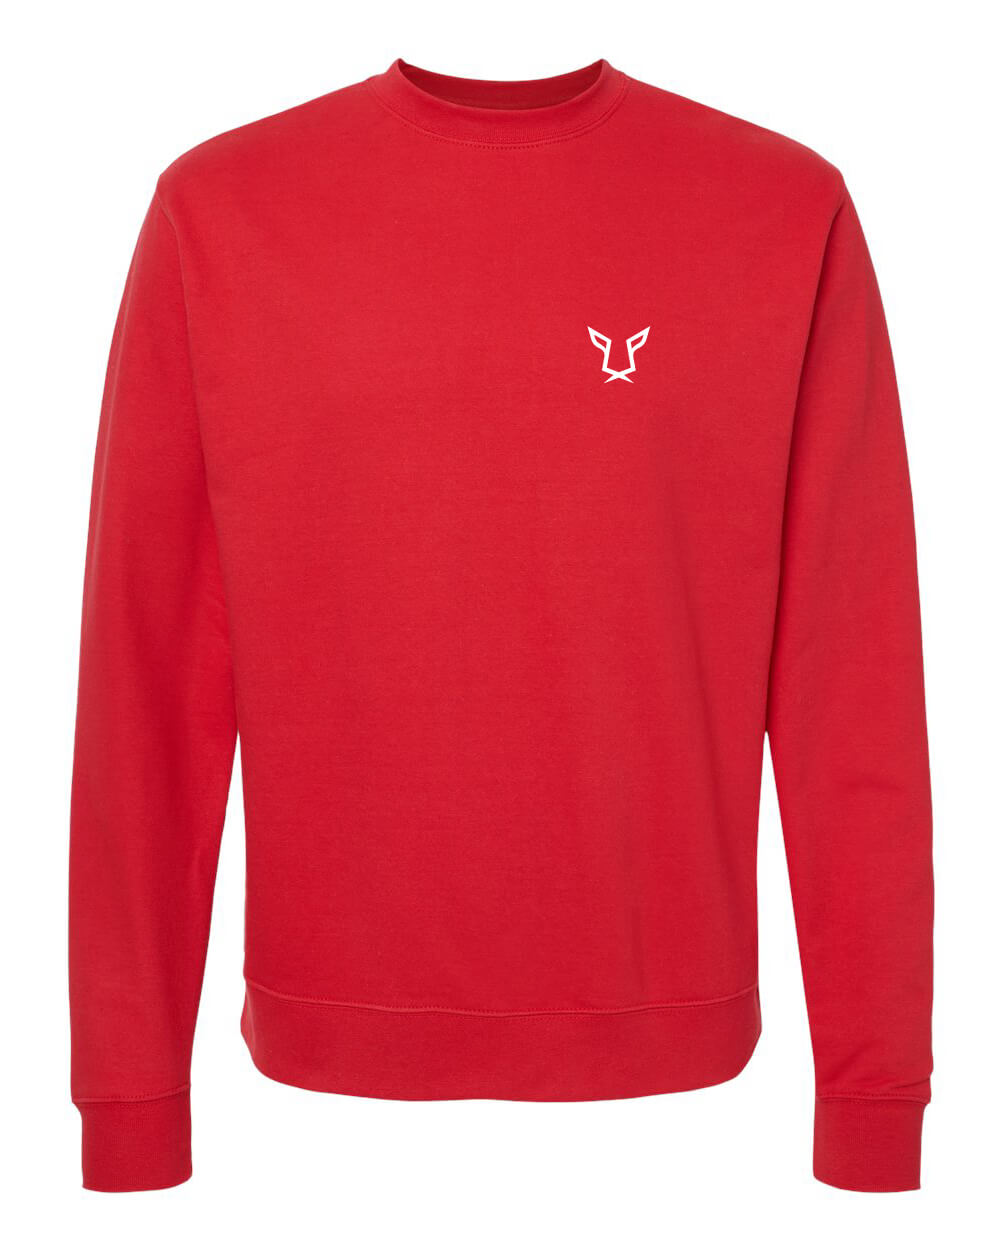 Unisex Red Evolution Crewneck Sweatshirt by Odisi Apparel